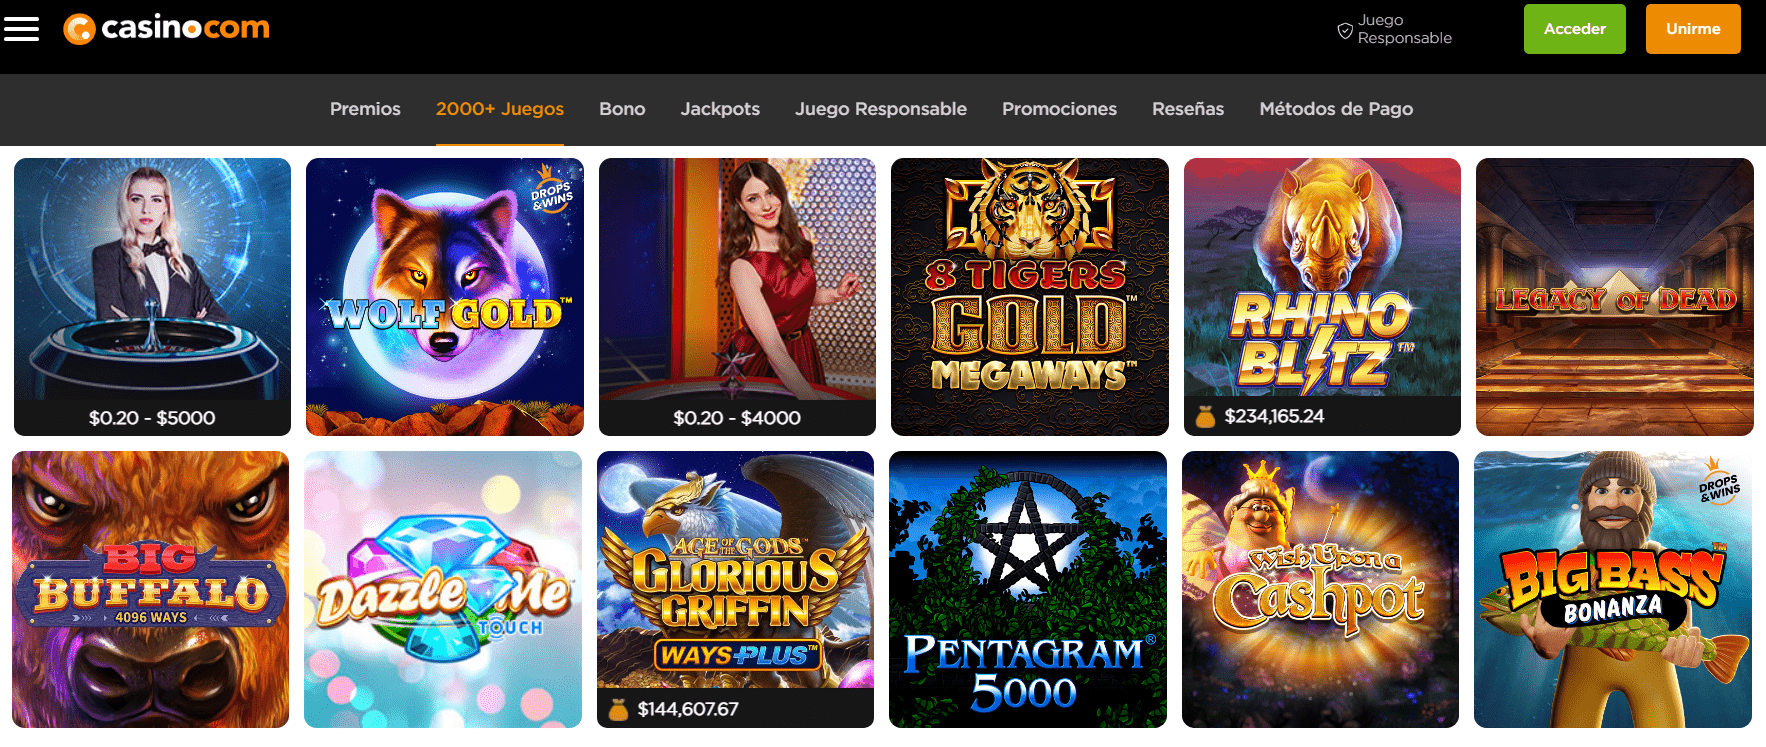 Juegos de Casino.com.